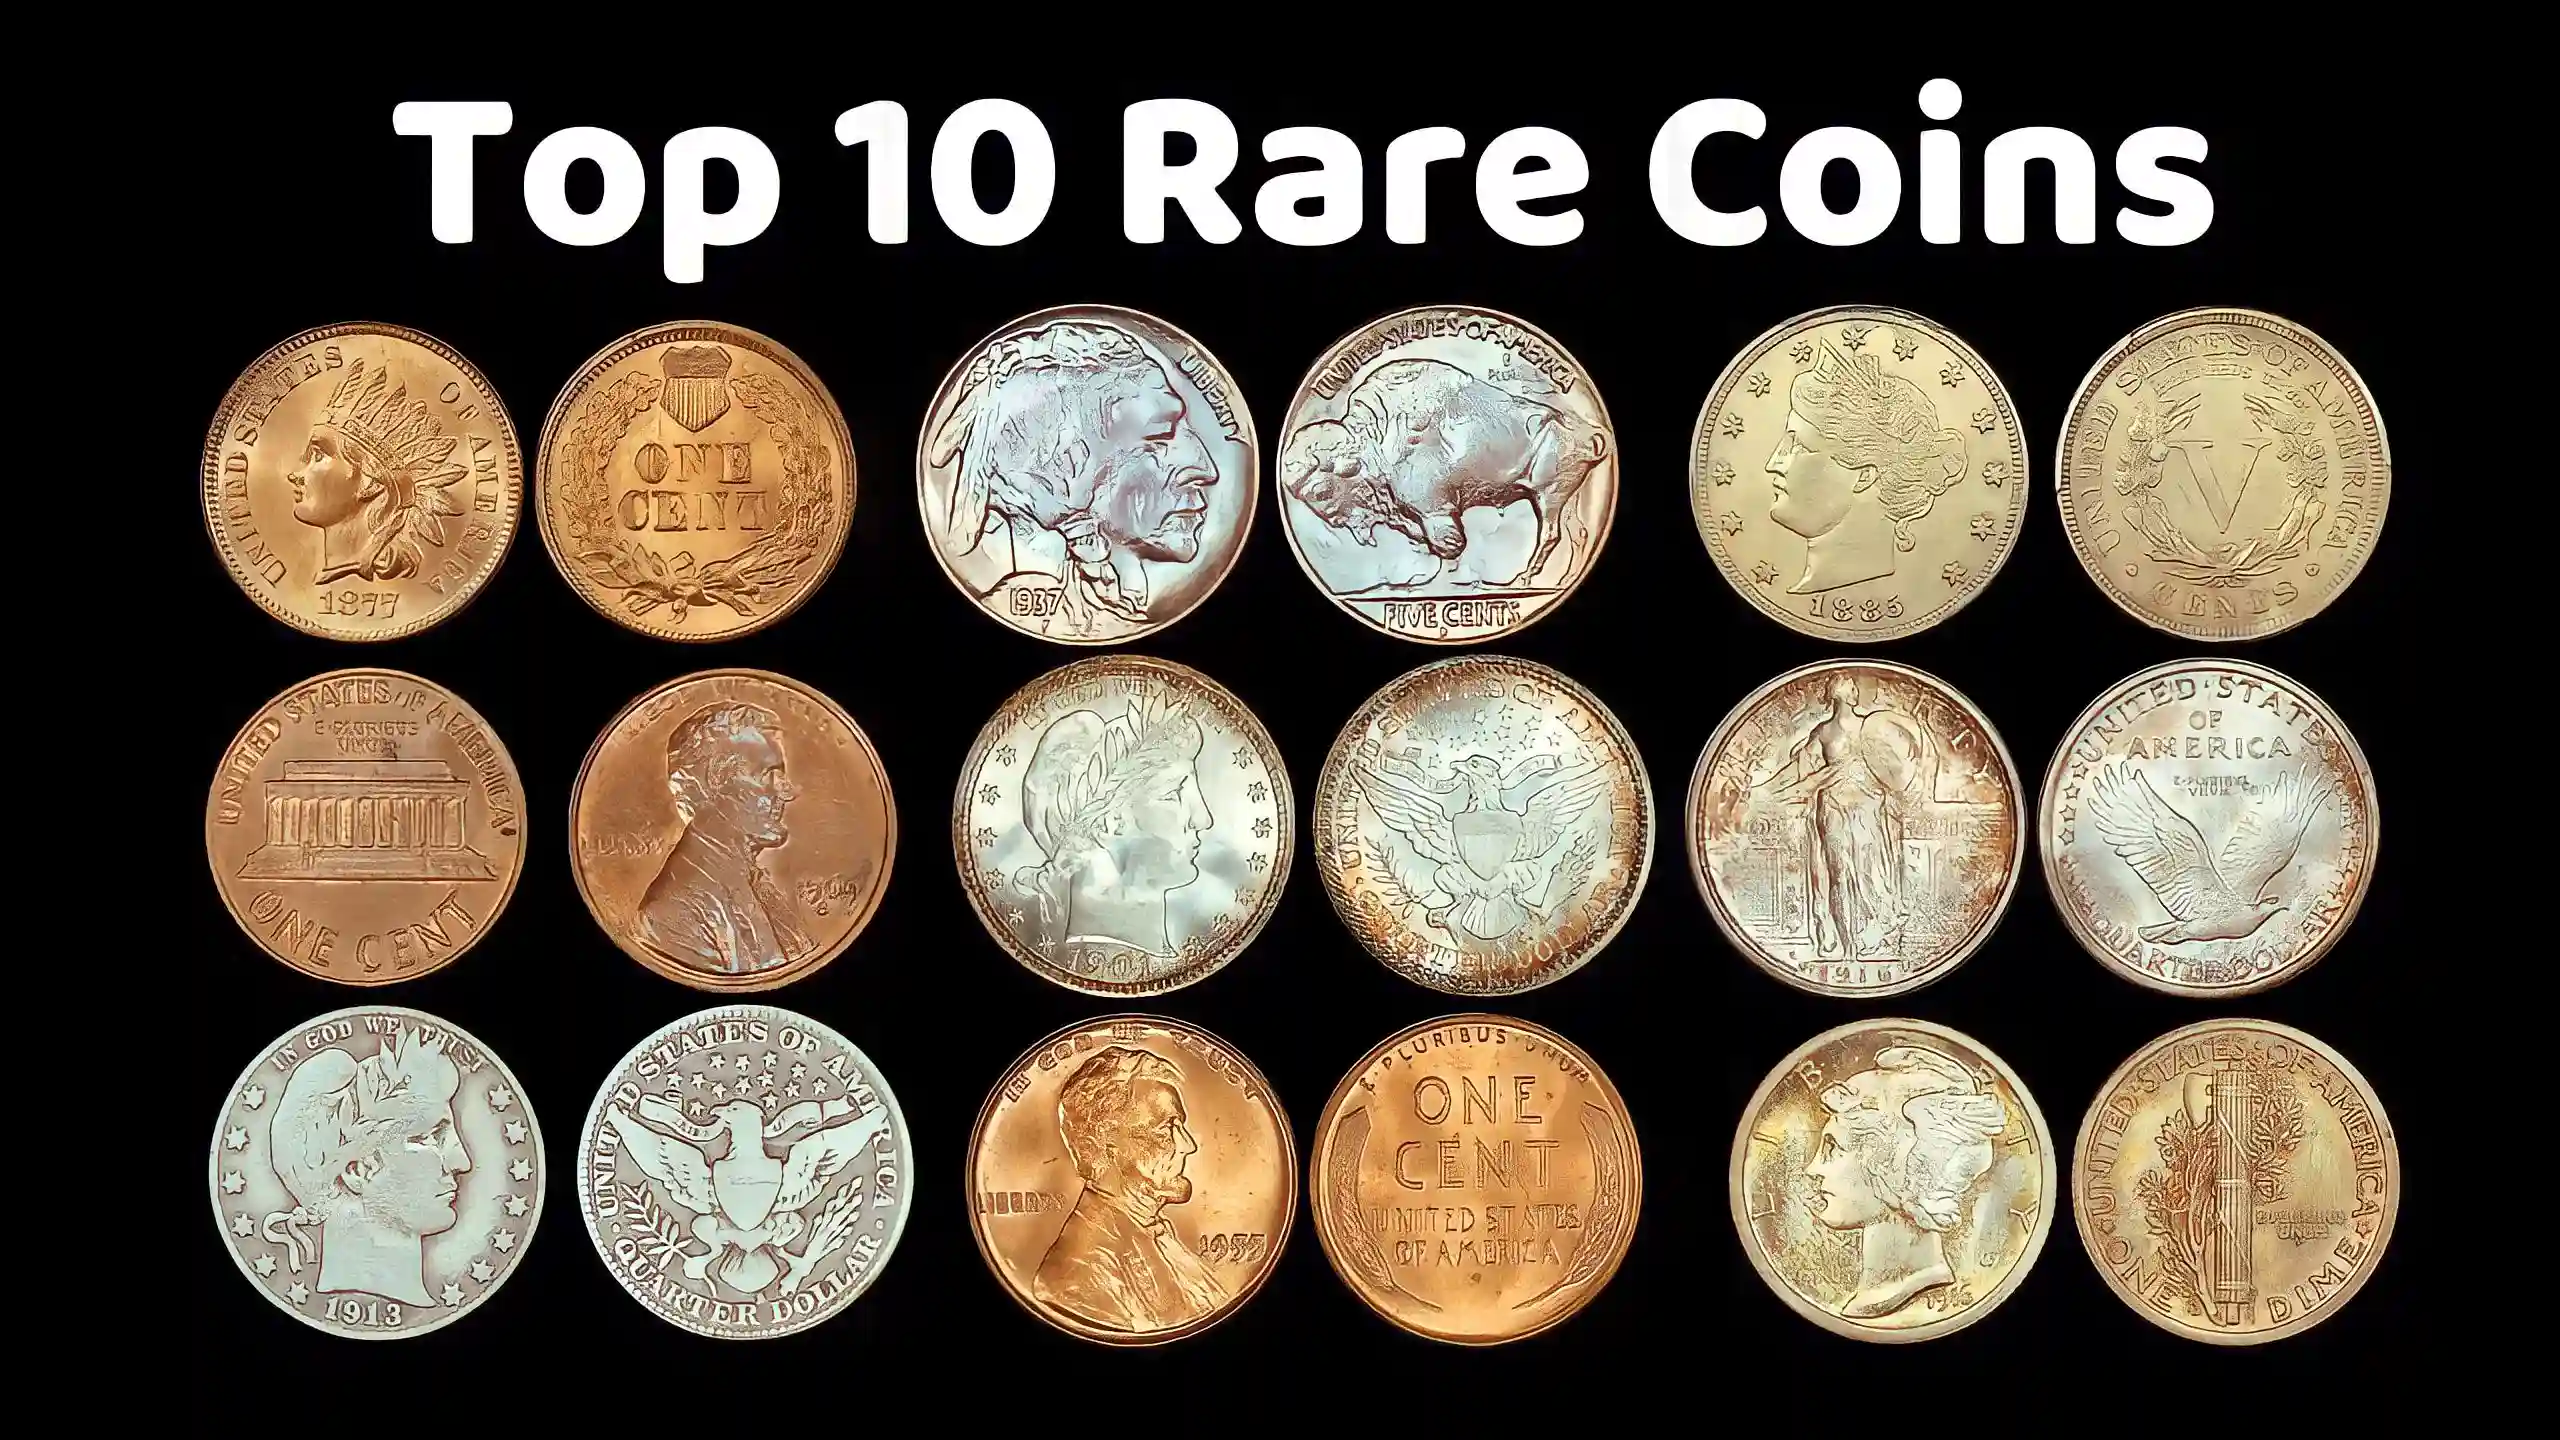 Discovering Hidden Treasures A Guide to the Top 10 Rare Coins